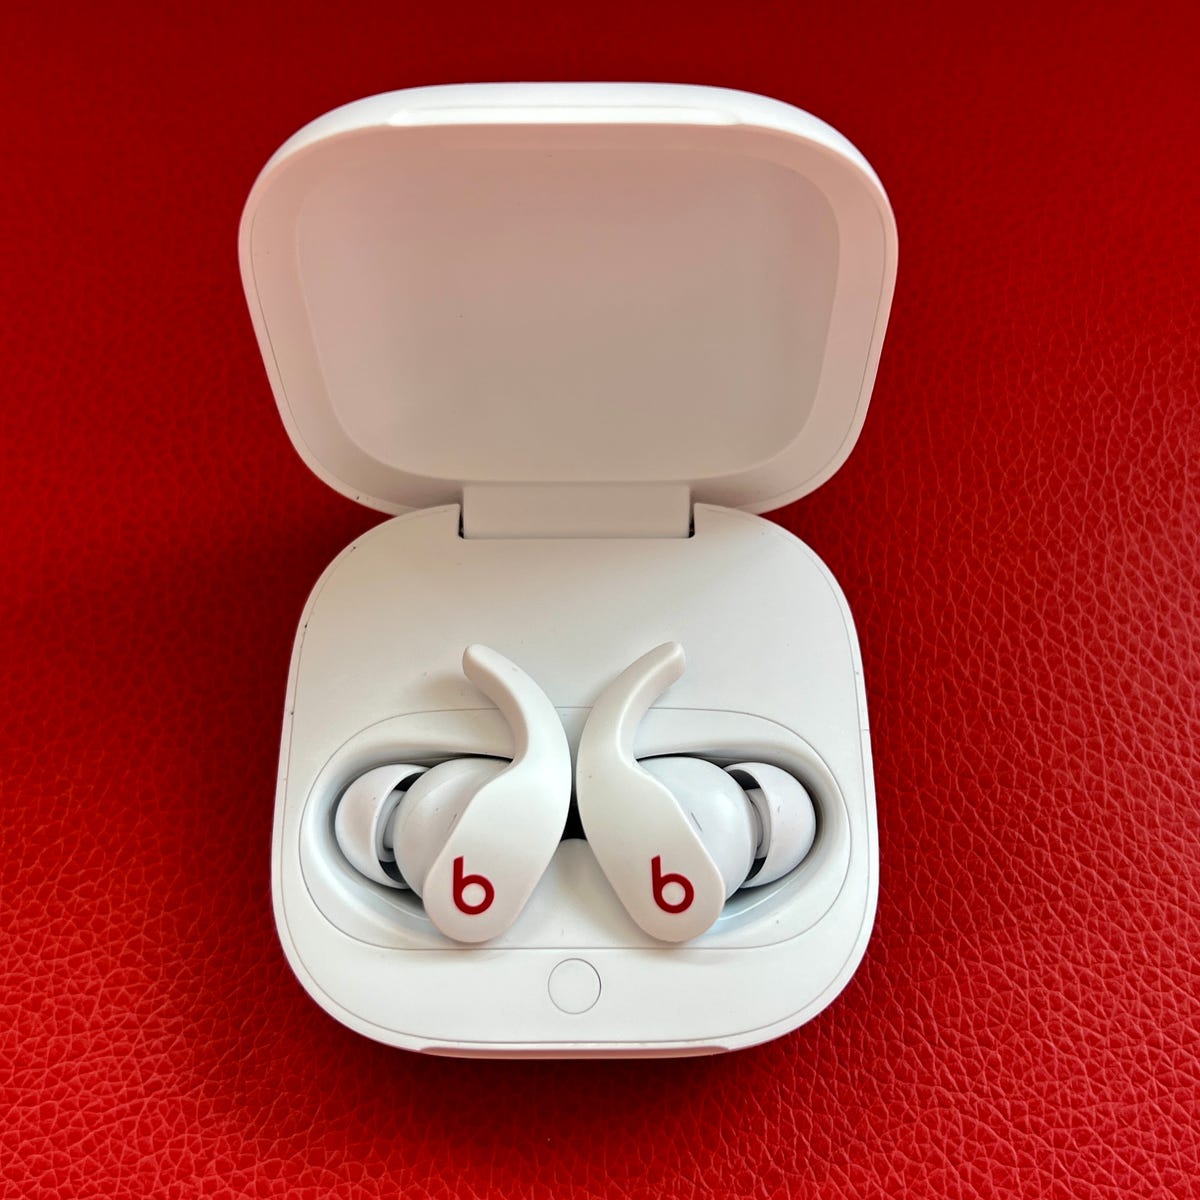 Beats Fit Pro Earbuds Deal: Get $61 Off 'Grade-A' Refurb at Woot - CNET